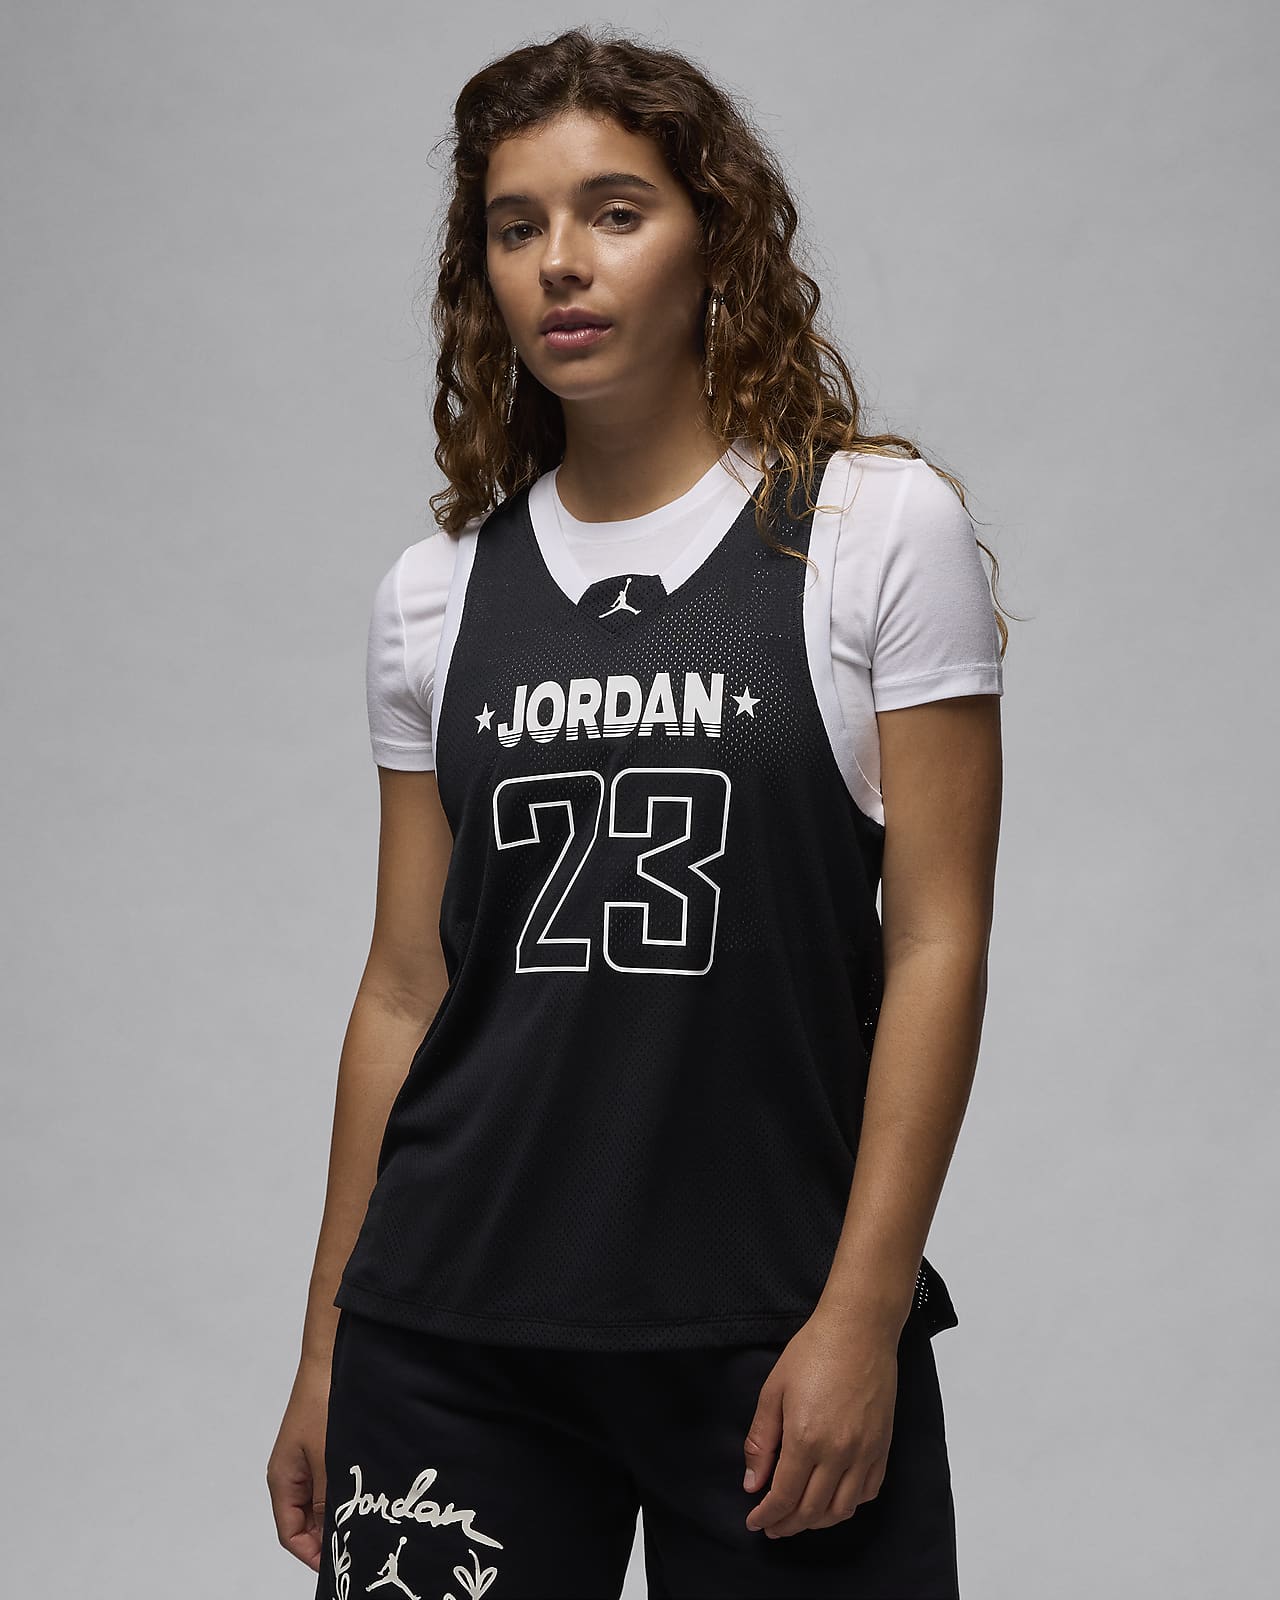 Black Jordan Women's 23 Tank Top Jersey